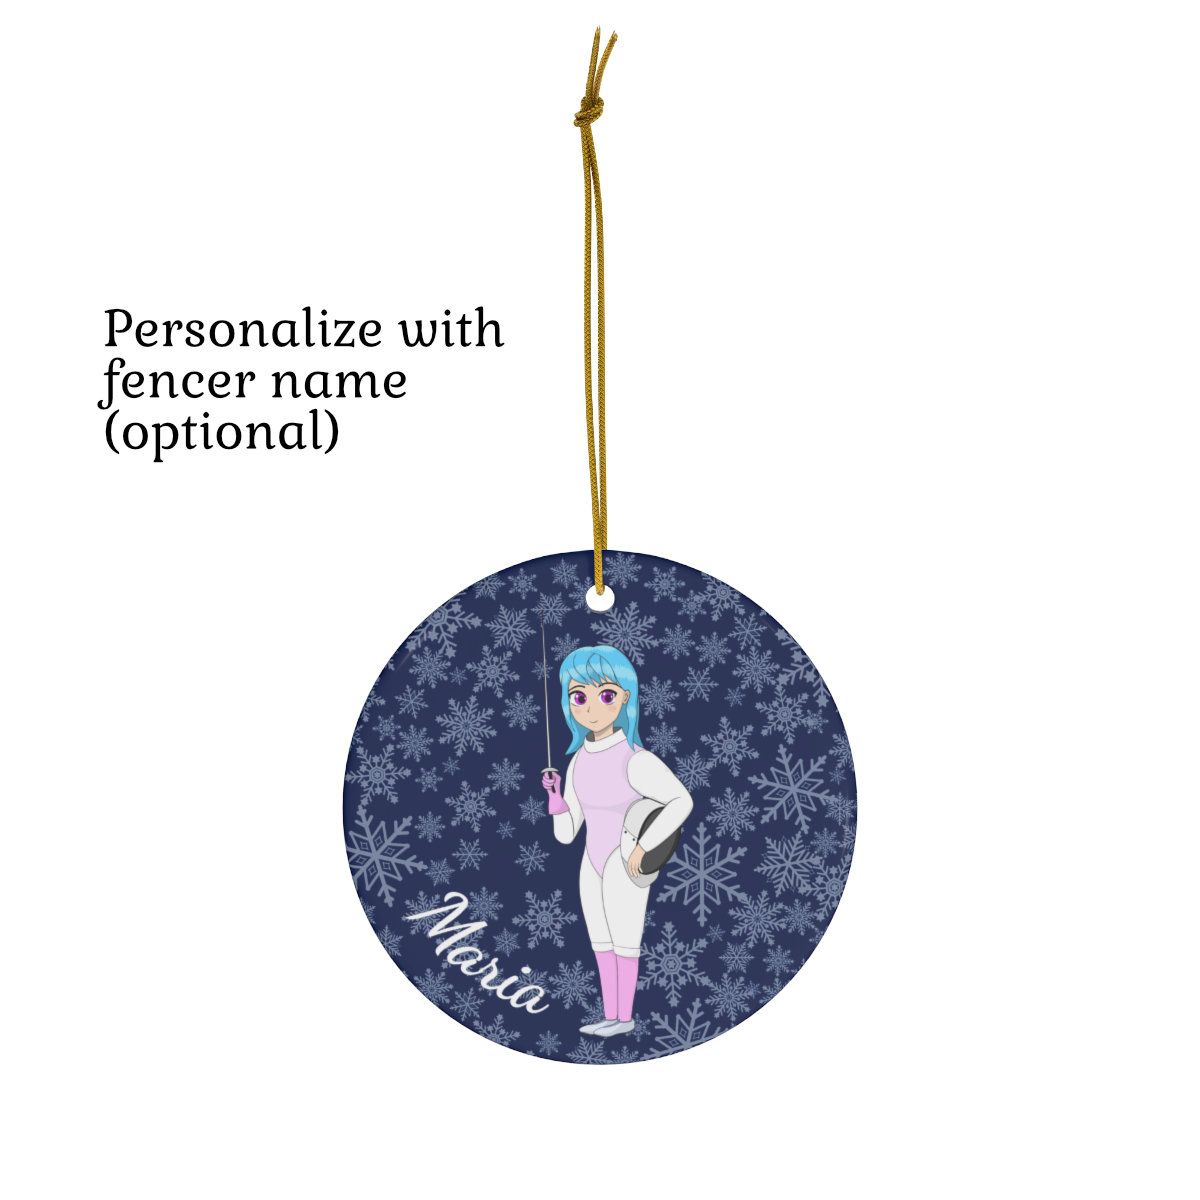 https://www.fencinglove.com/wp-content/uploads/2021/11/ornament-personalize.jpg